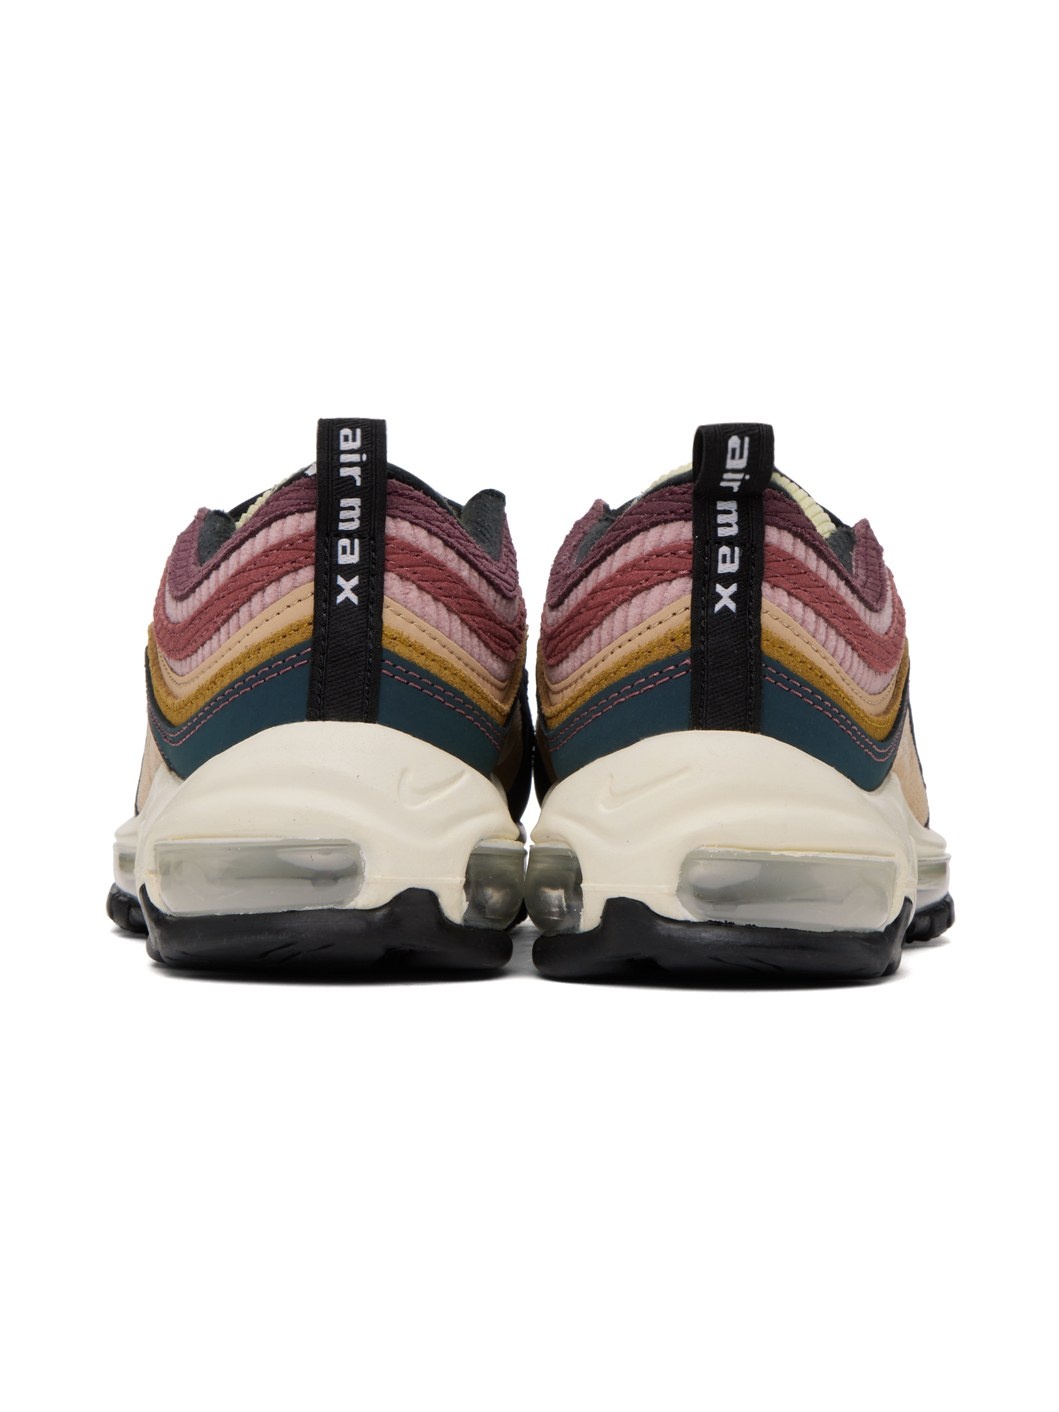 Multicolor Air Max 97 Sneakers - 2